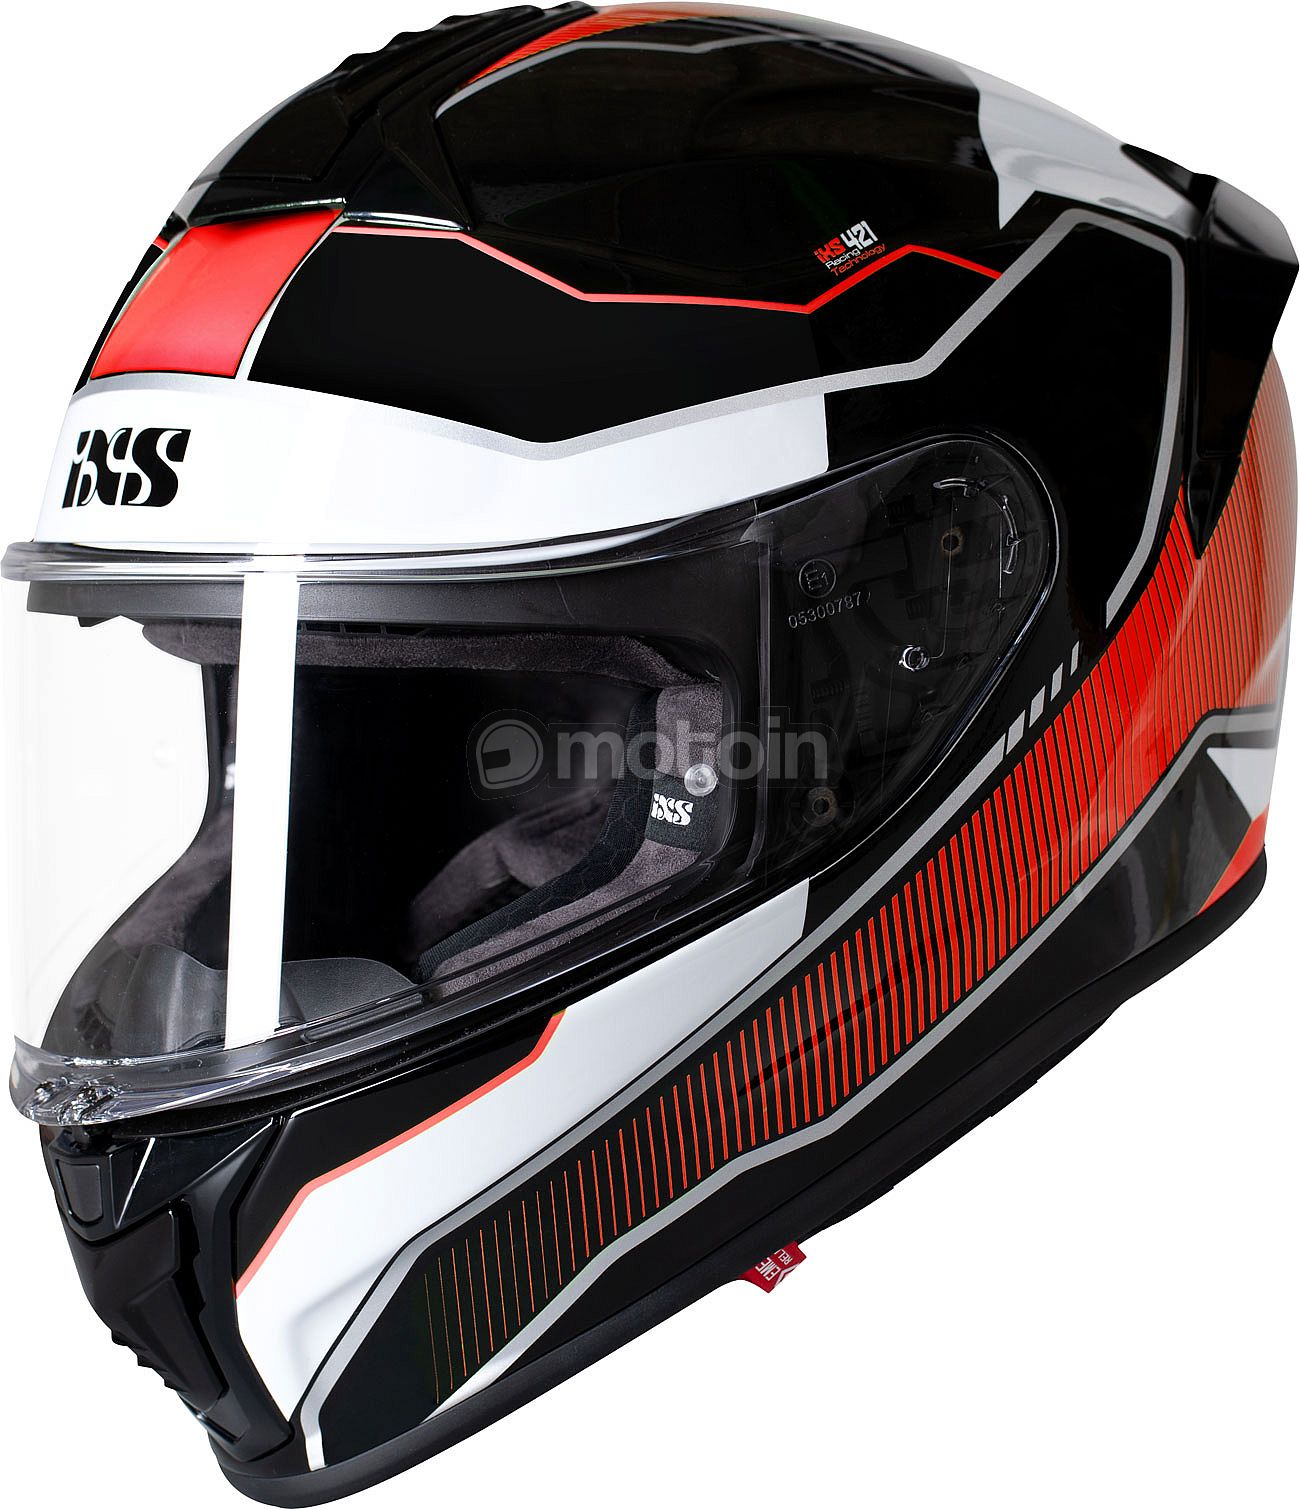 IXS 421 FG 2.1 MIPS, full face helmet